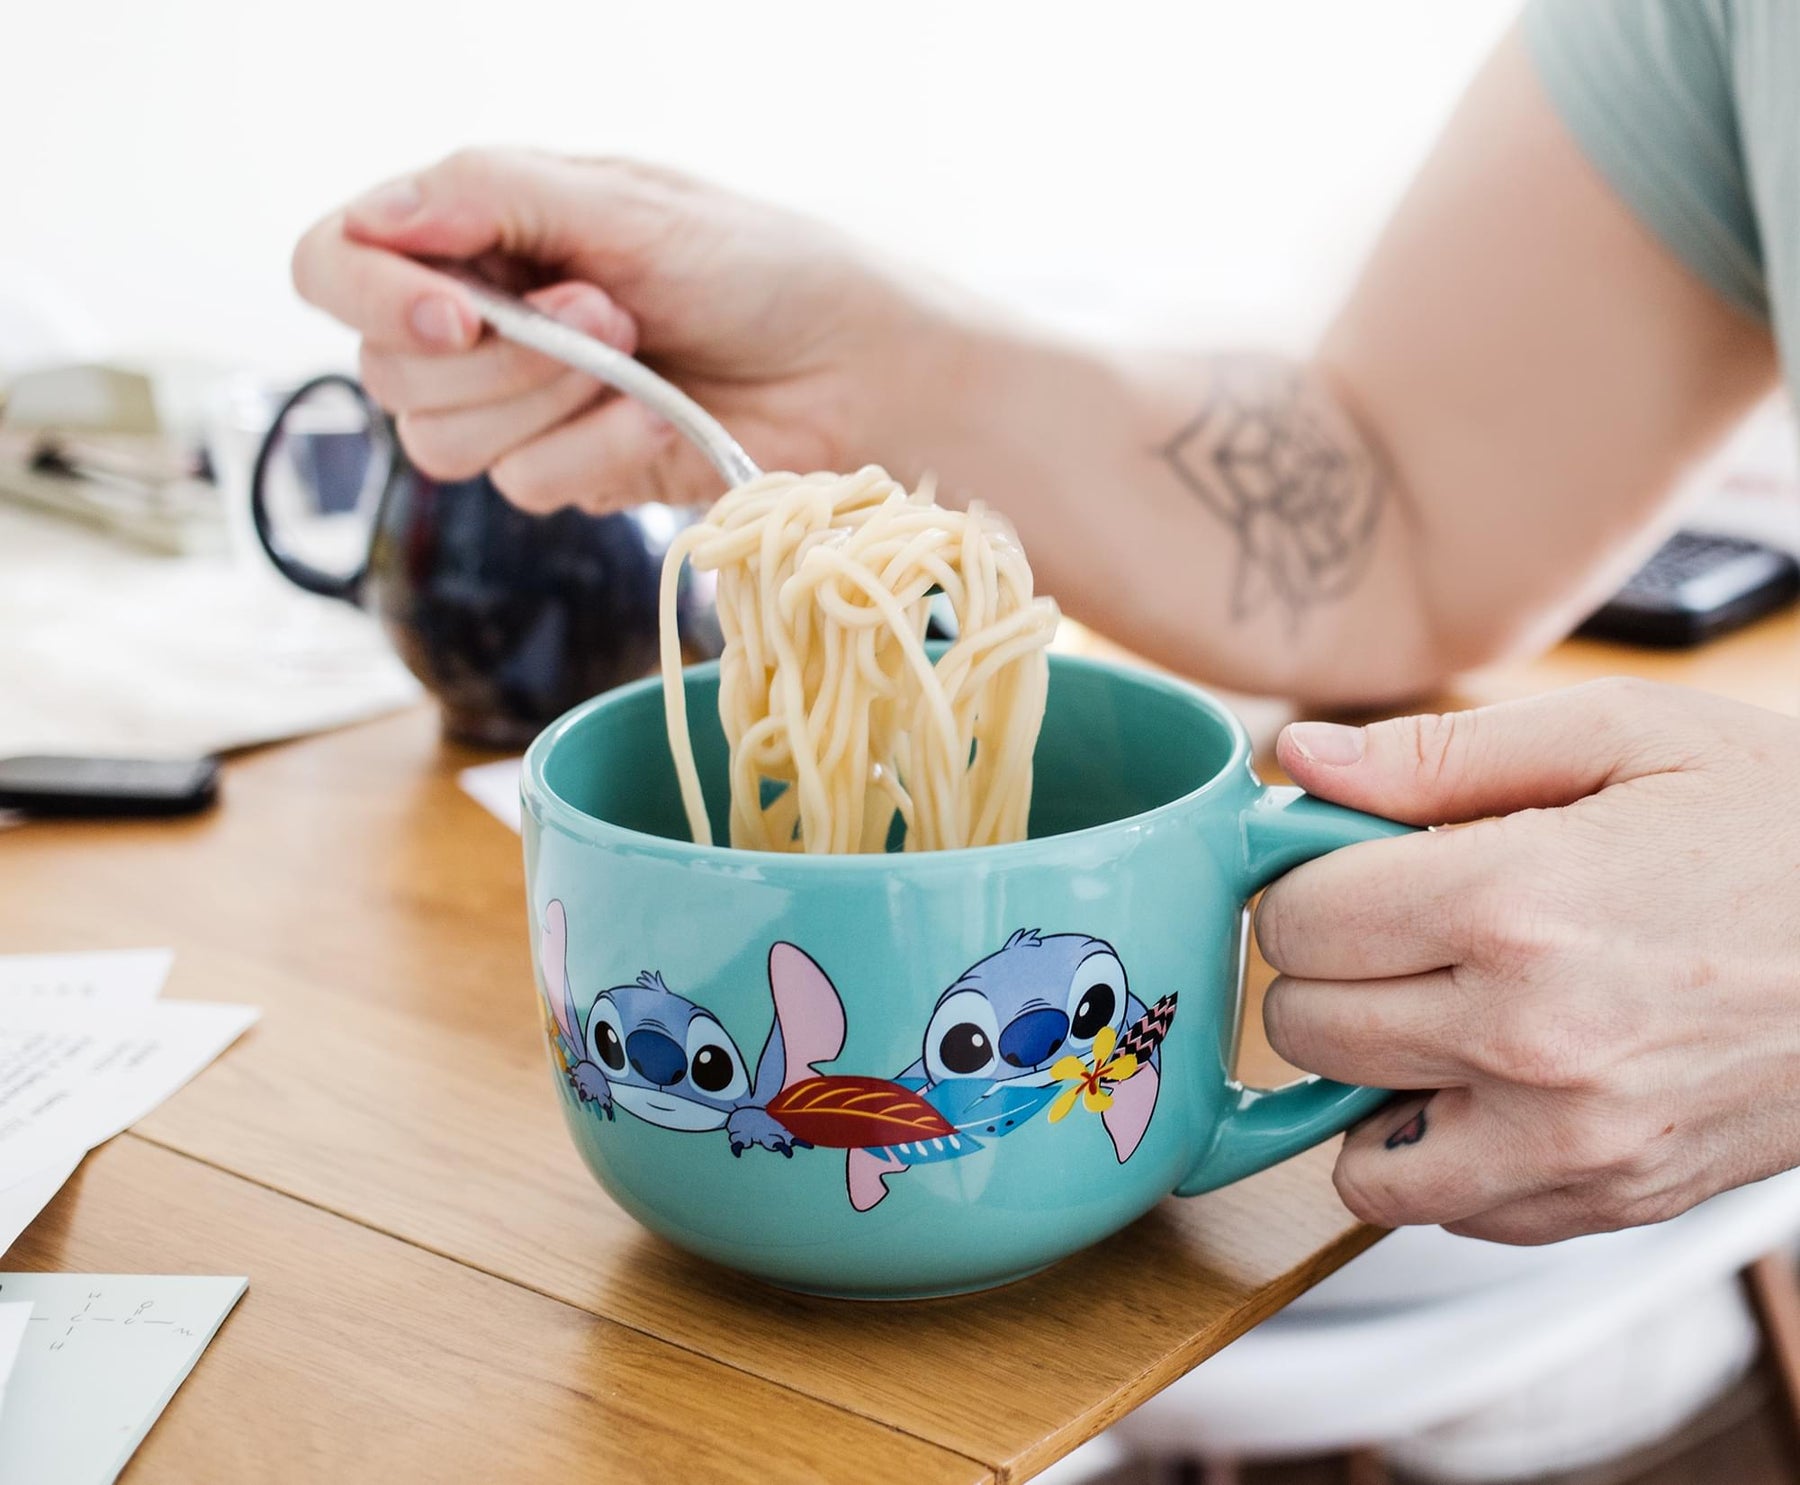 Disney Lilo & Stitch Aloha Ceramic Soup Mug With Vented Lid | Holds 24 Ounces